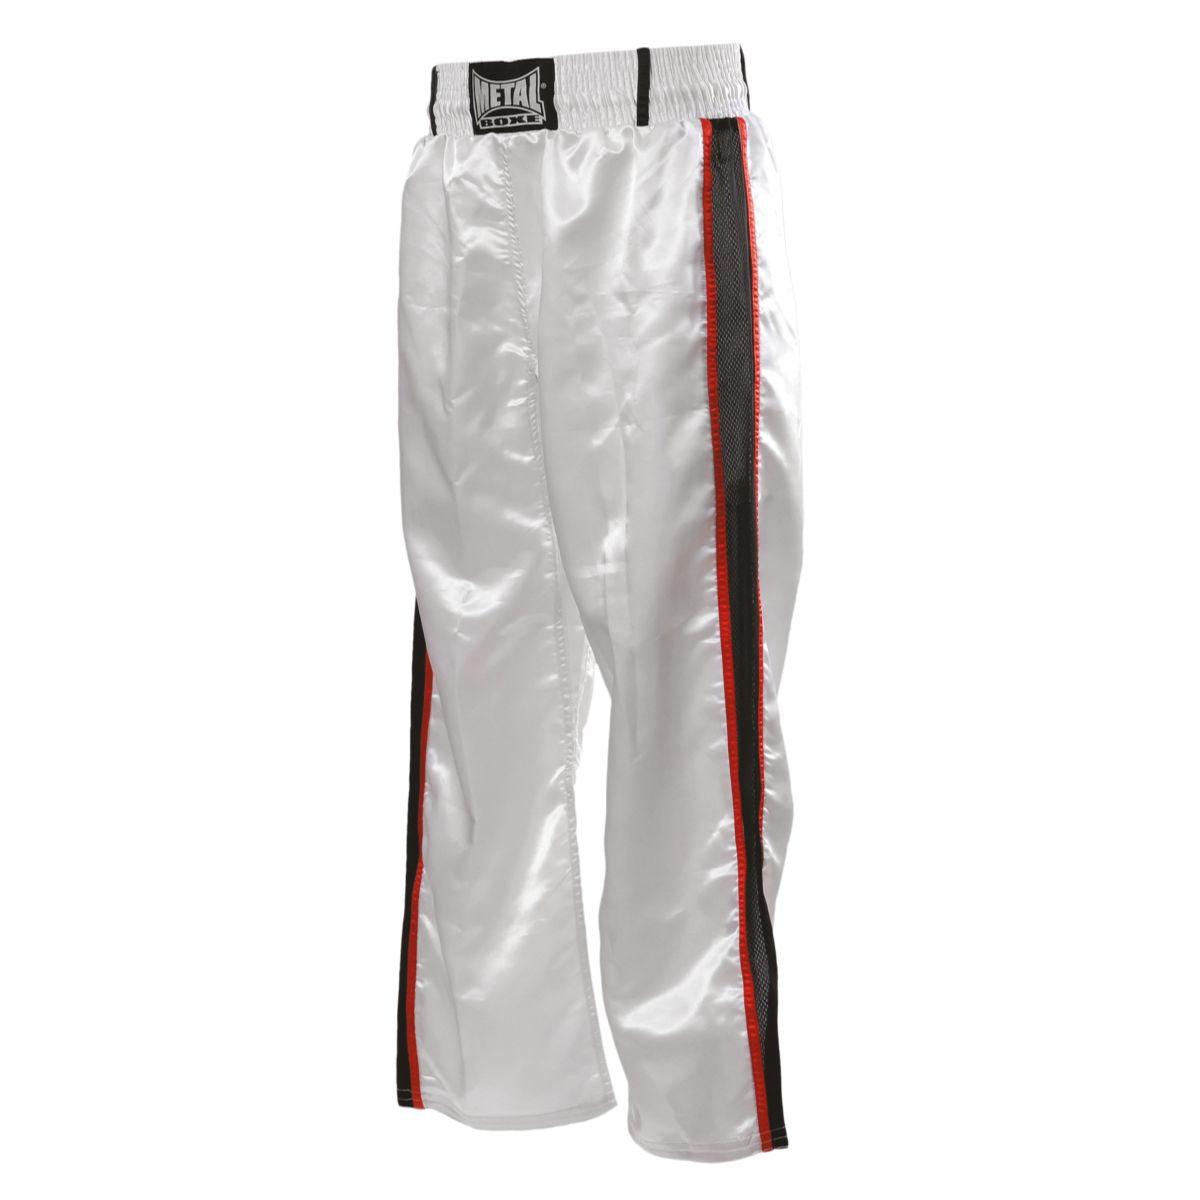 Pantalon de Full Contact Metal Boxe Blanc